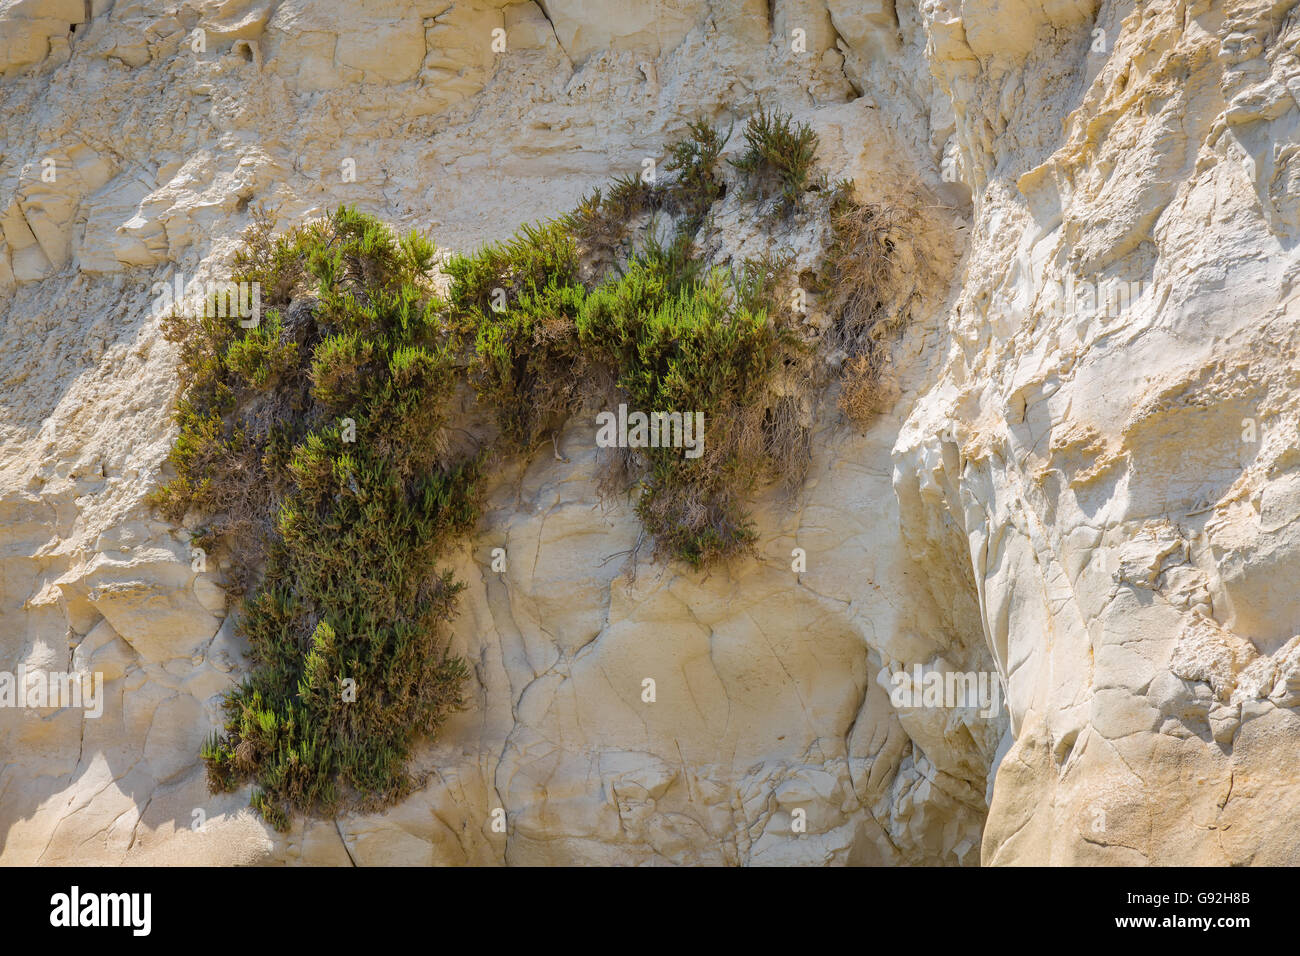 Rocky coast formed by sandy sediments and sandstone cliffs. Marsaskala on the coast of the Malta island in the Mediterranean. Stock Photo